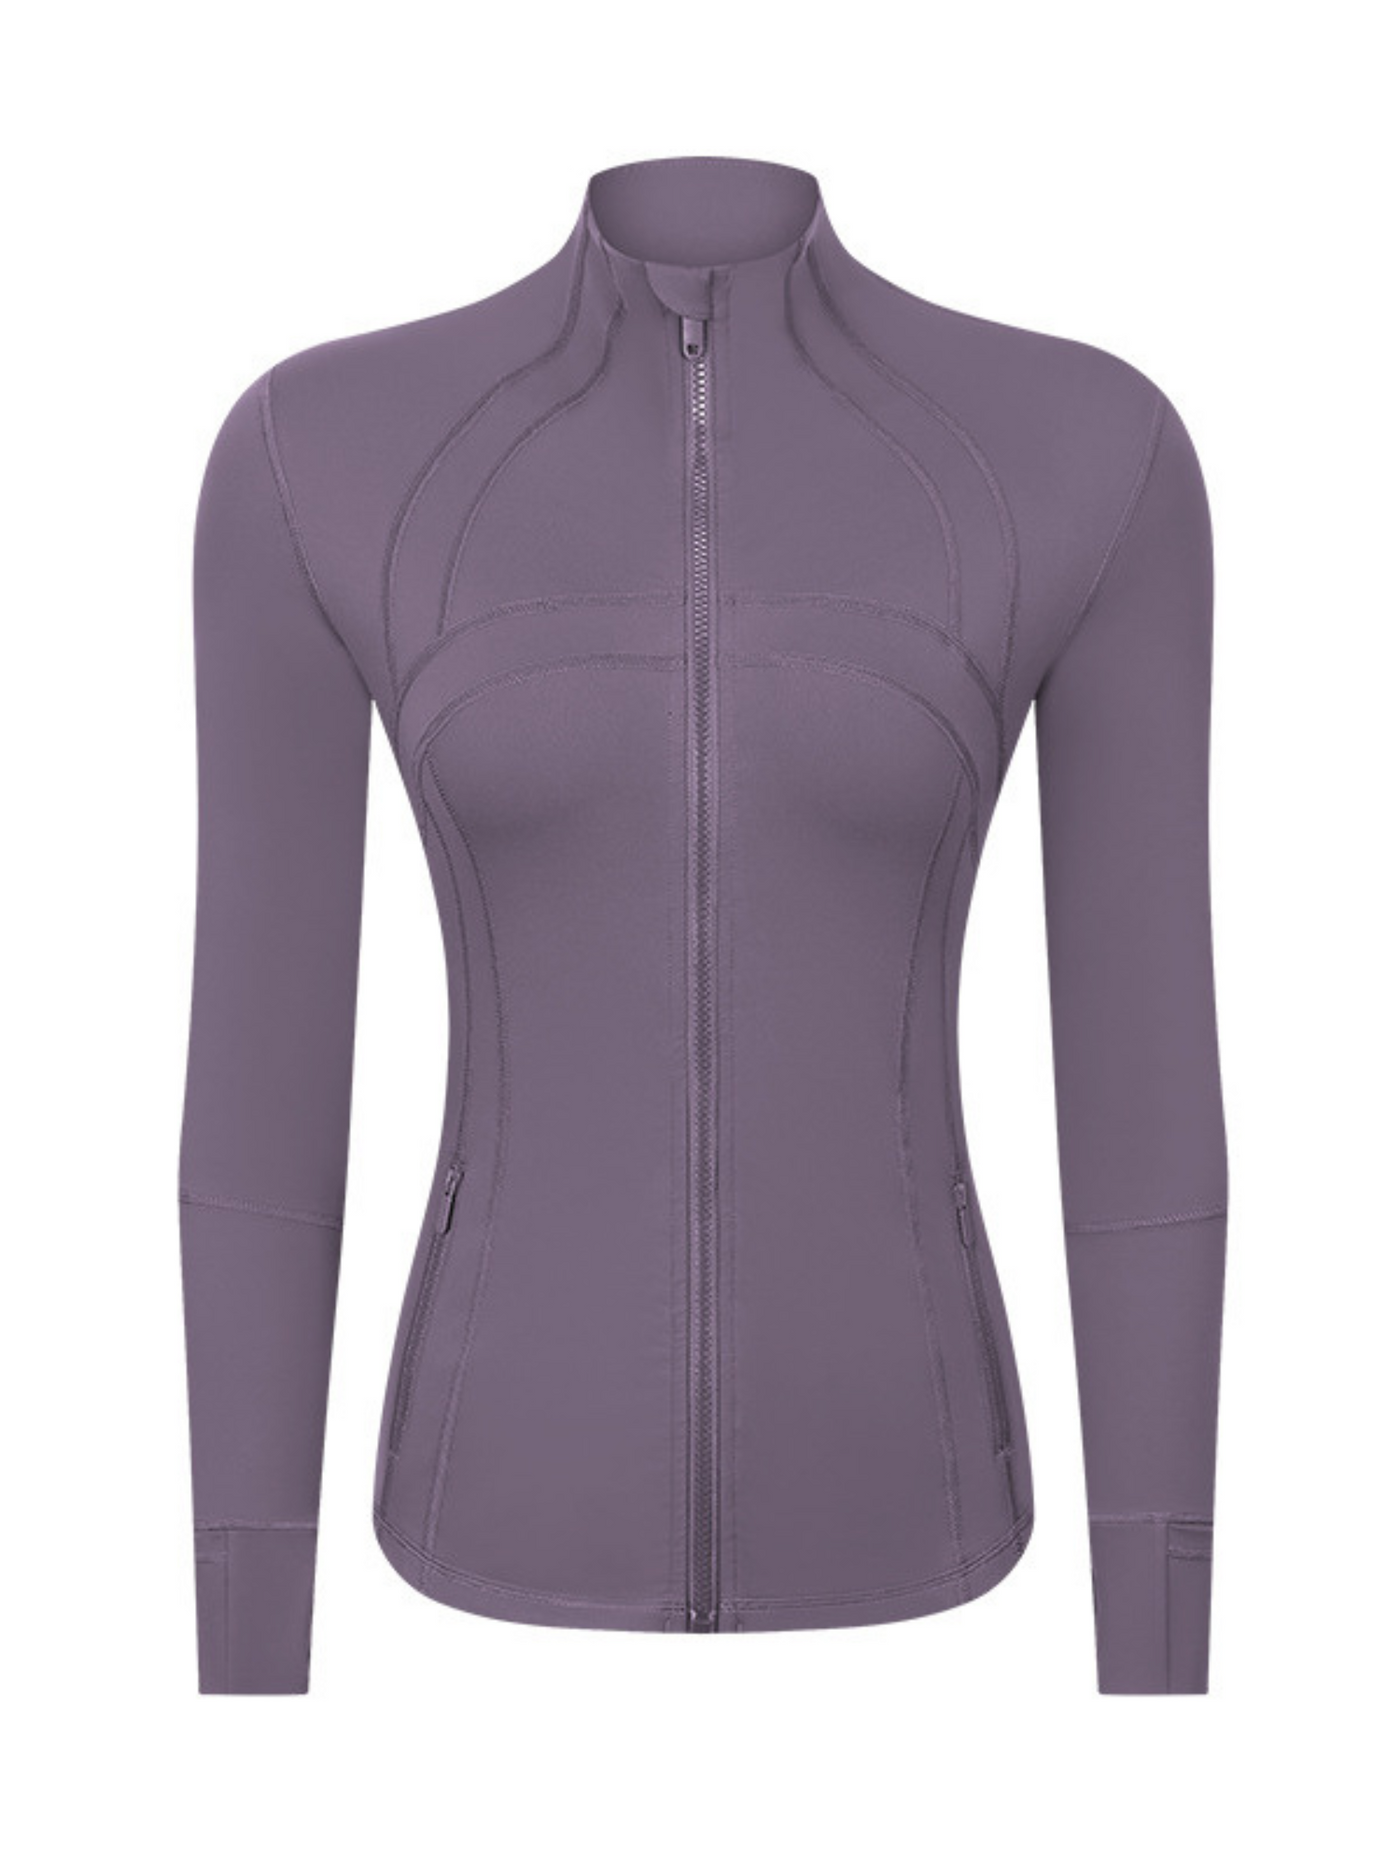 Navalora Fit Full Zip Active Jacket Define Jacket Dupe in Lavender